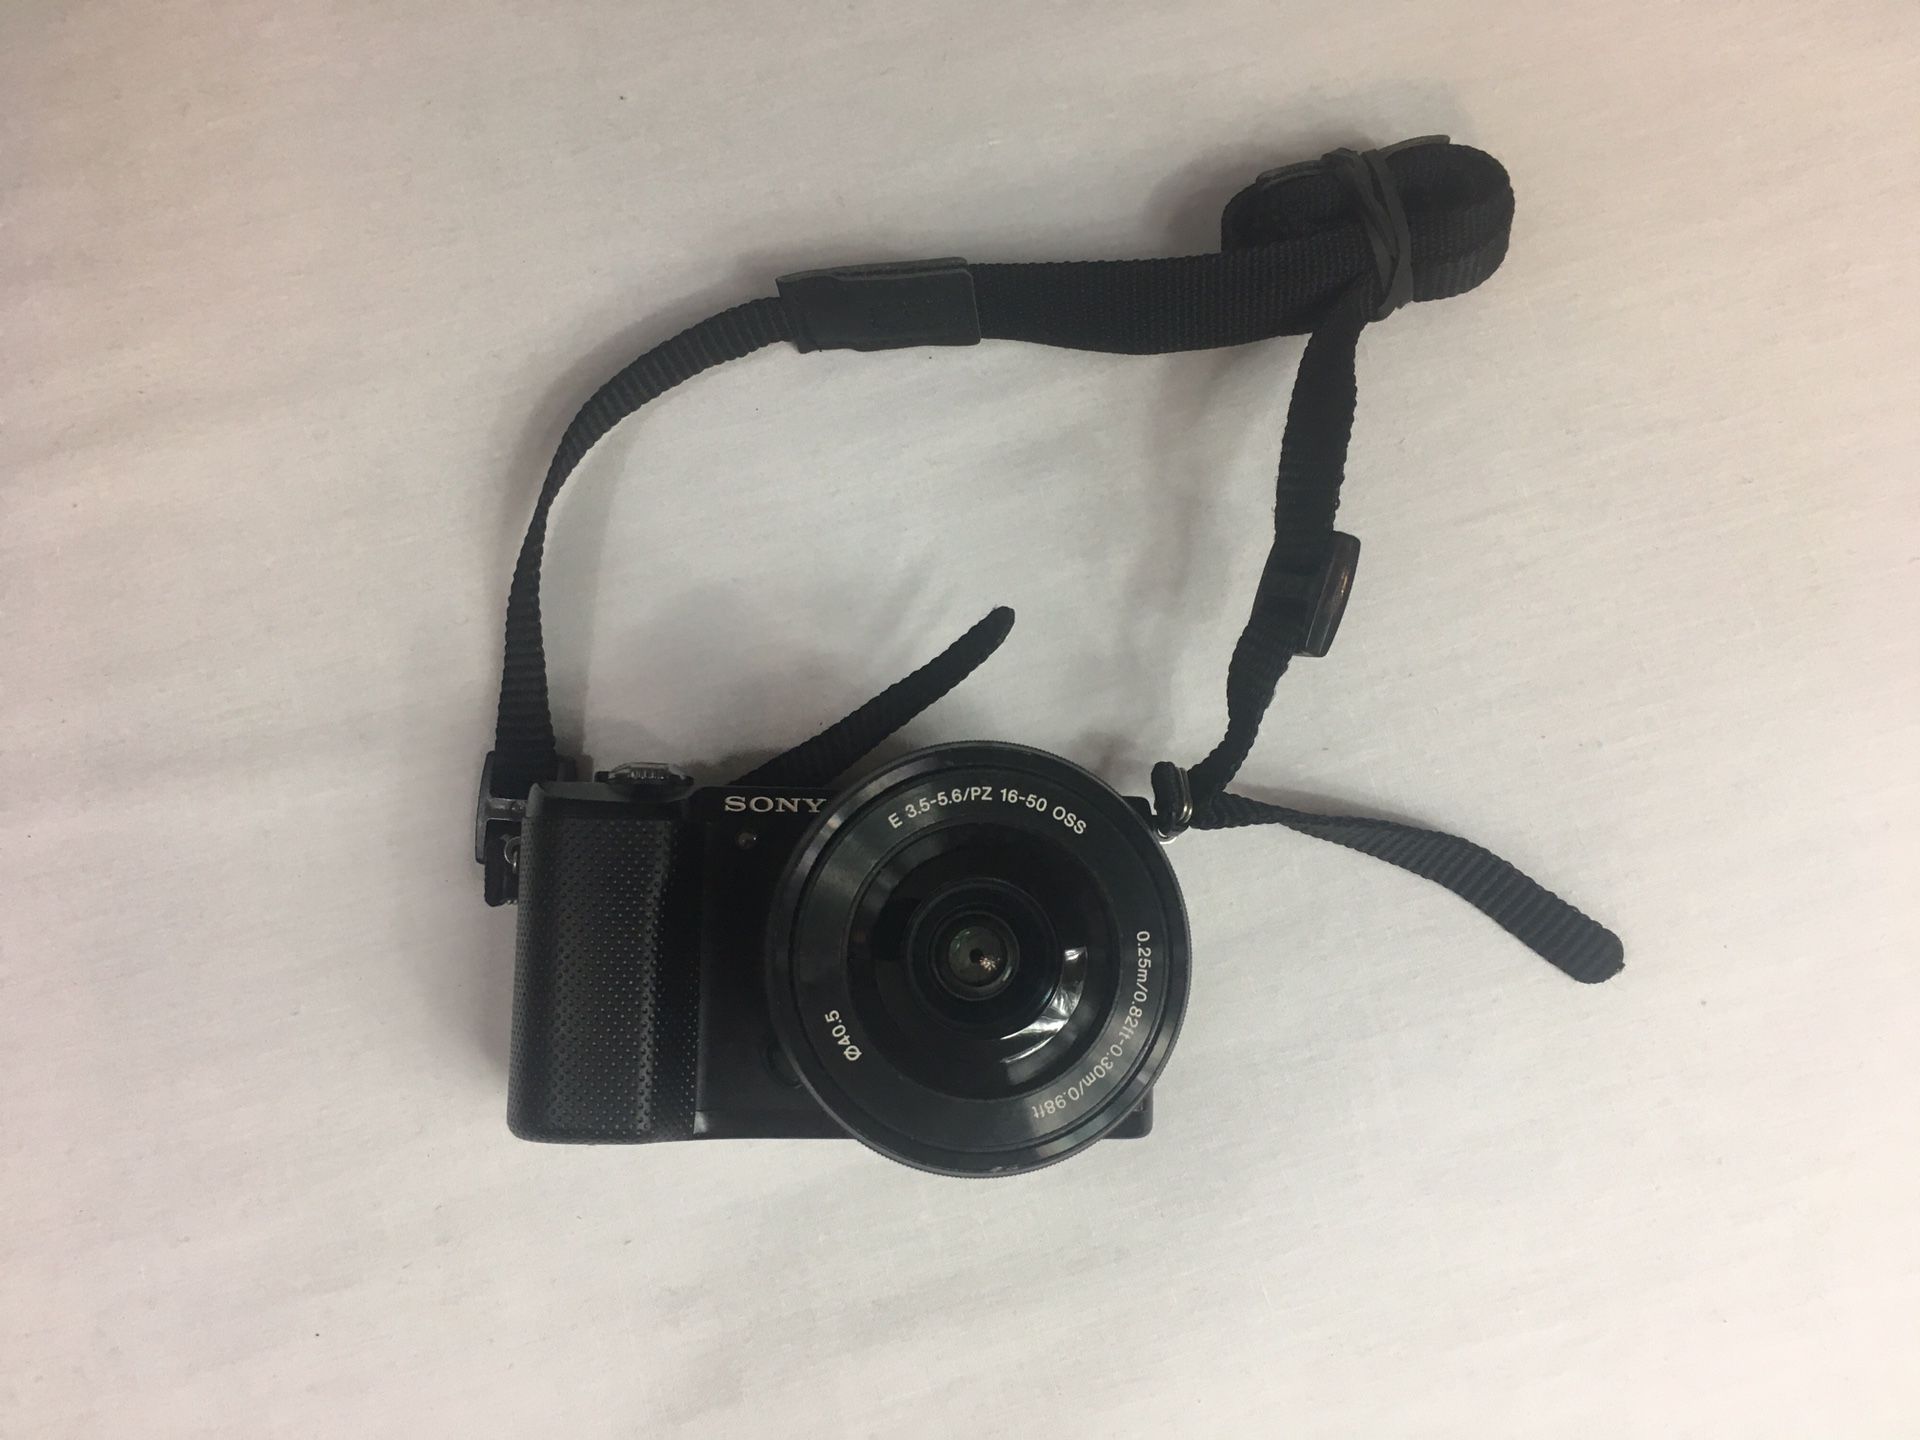 Sony a5000 Mirrorless Camera (Black)